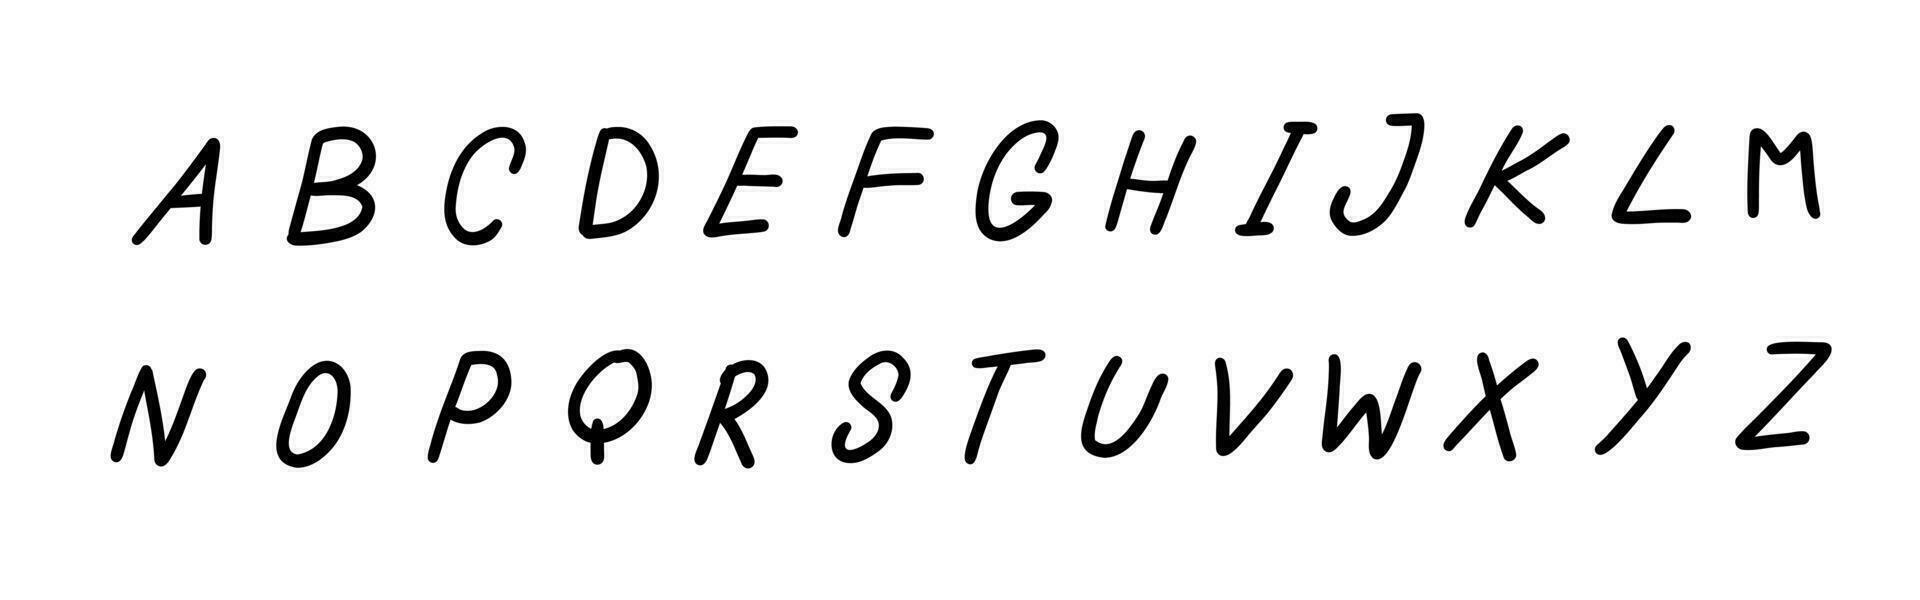 Irregular shapes black english latin abc alphabet font A to Z. Vector illustration in handmade doodle, handwritten doodle style isolated on white background. For learning, wedding invitation, logo.